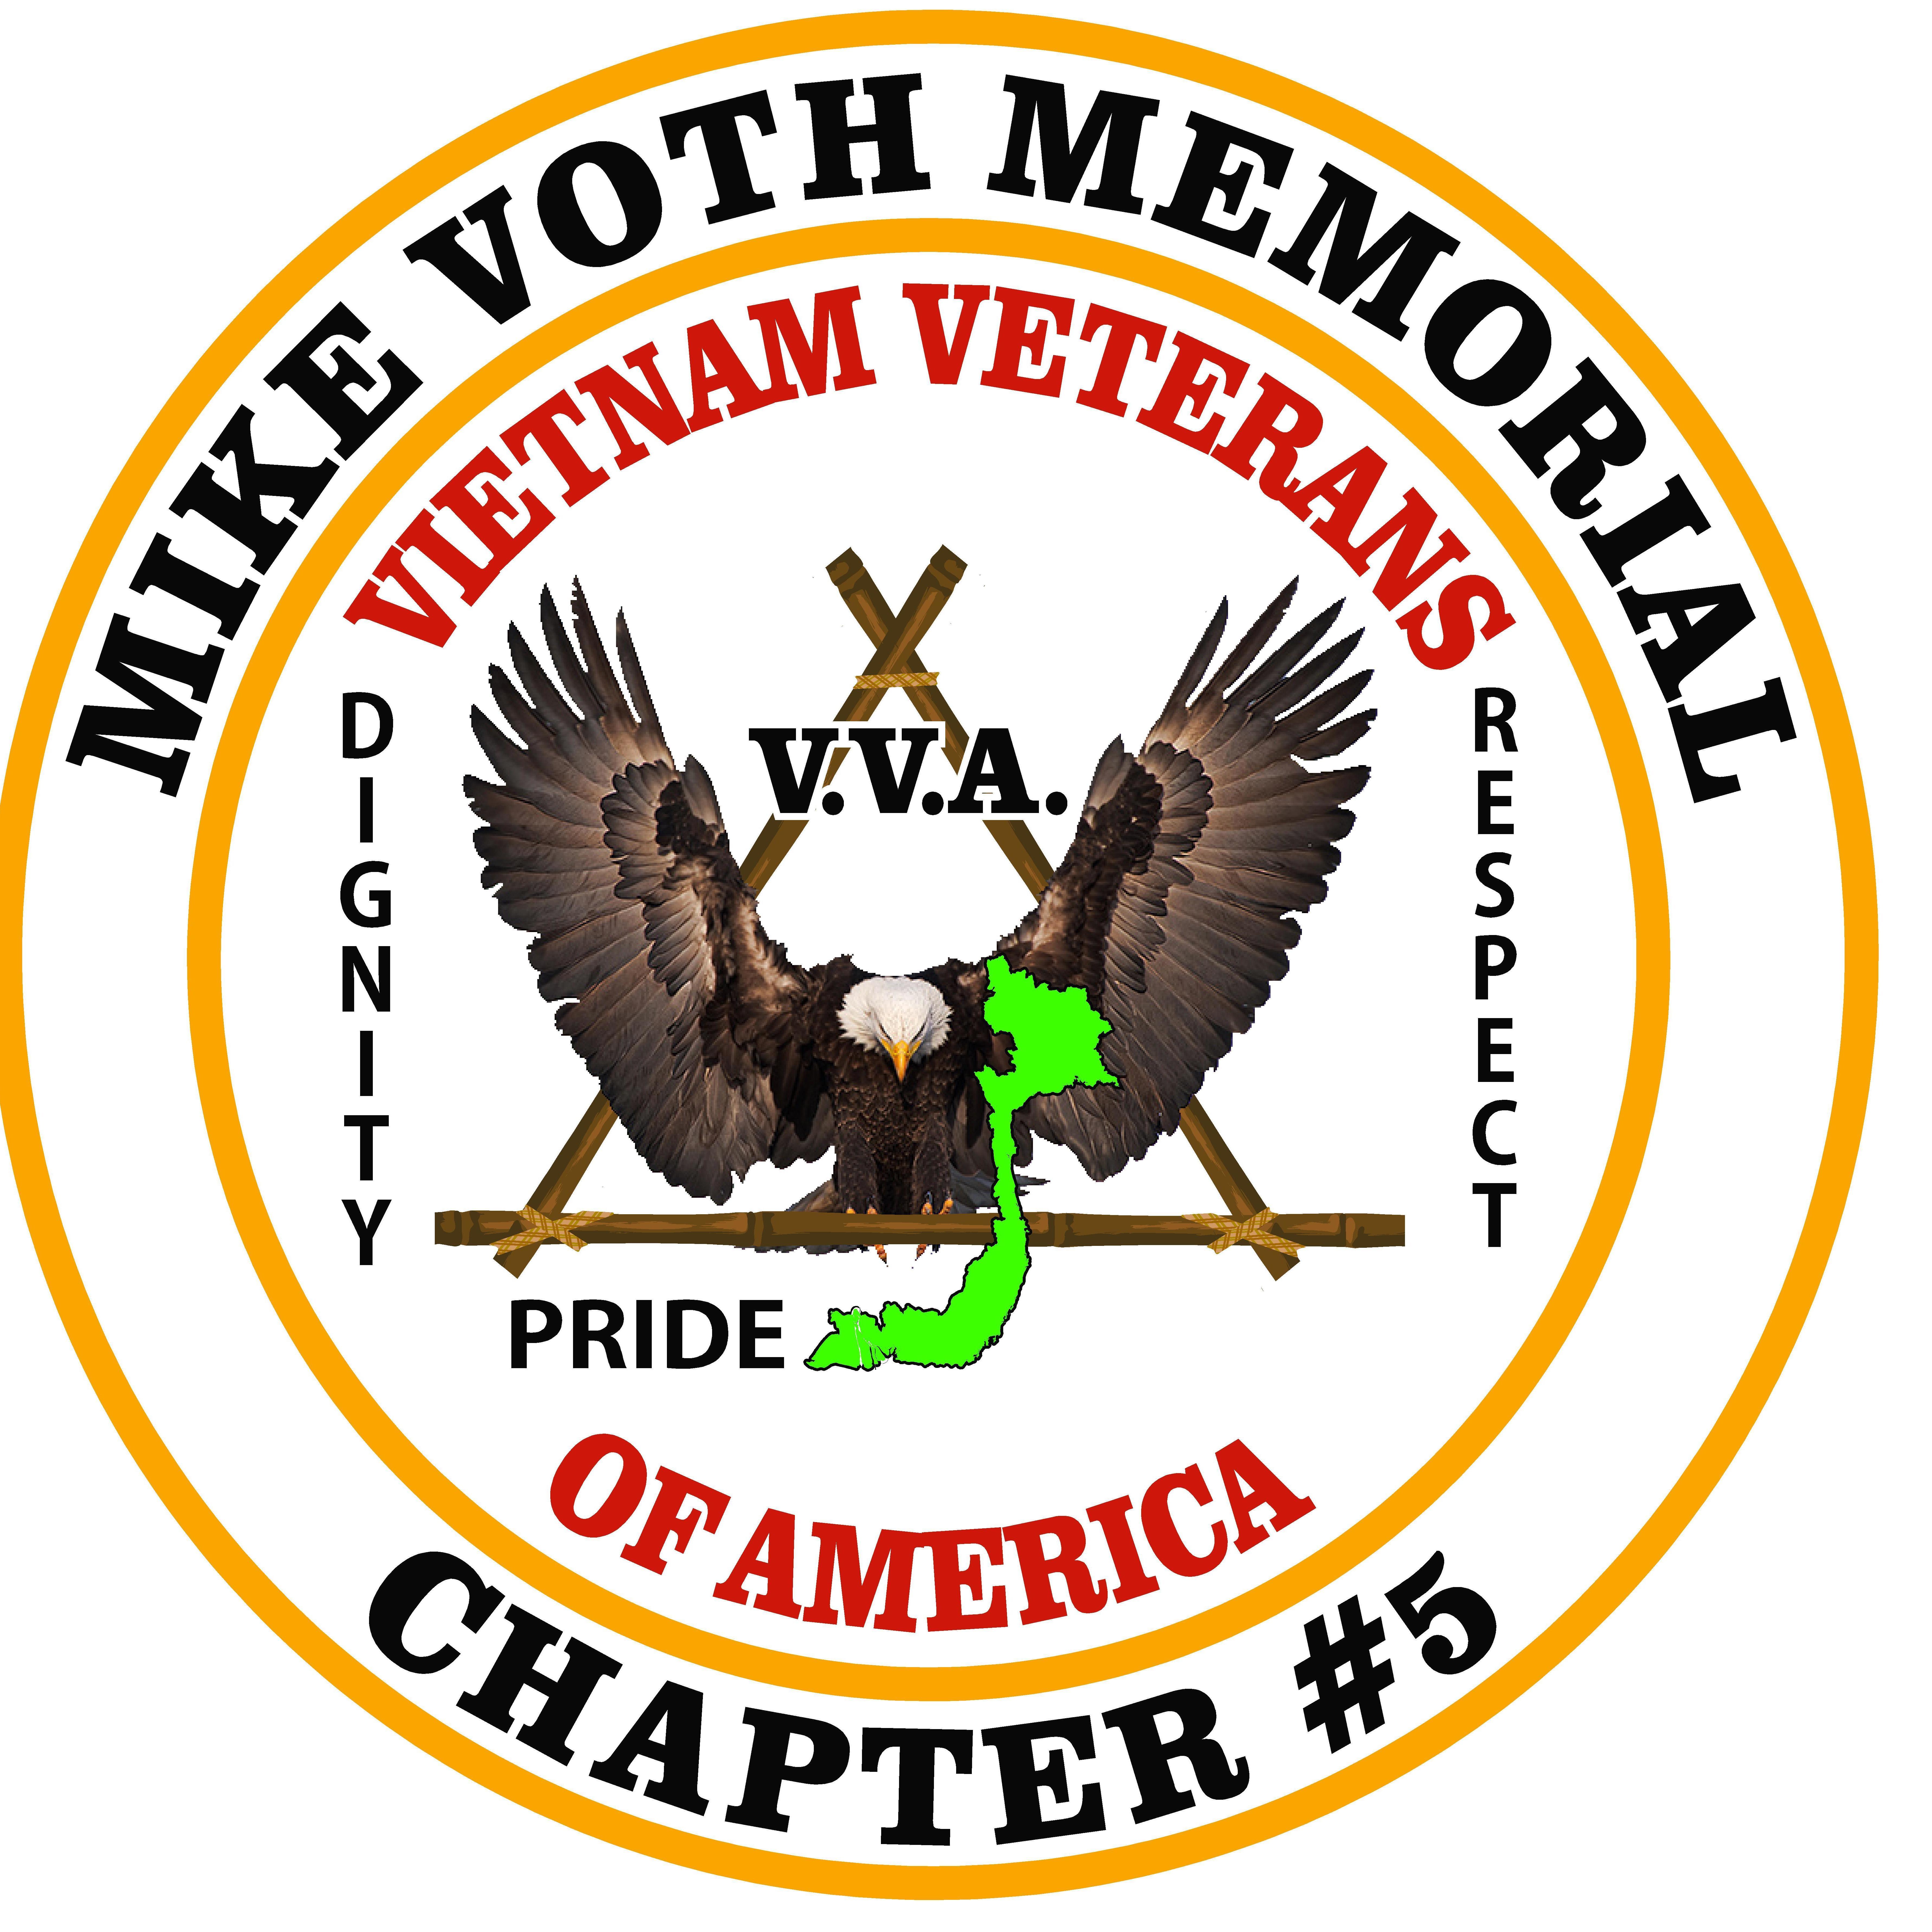 MIKE VOTH MEMORIAL CHAPTER 5 OF VIETNAM VETERANS OF AMERICA NURSING SCHOLARSHIP